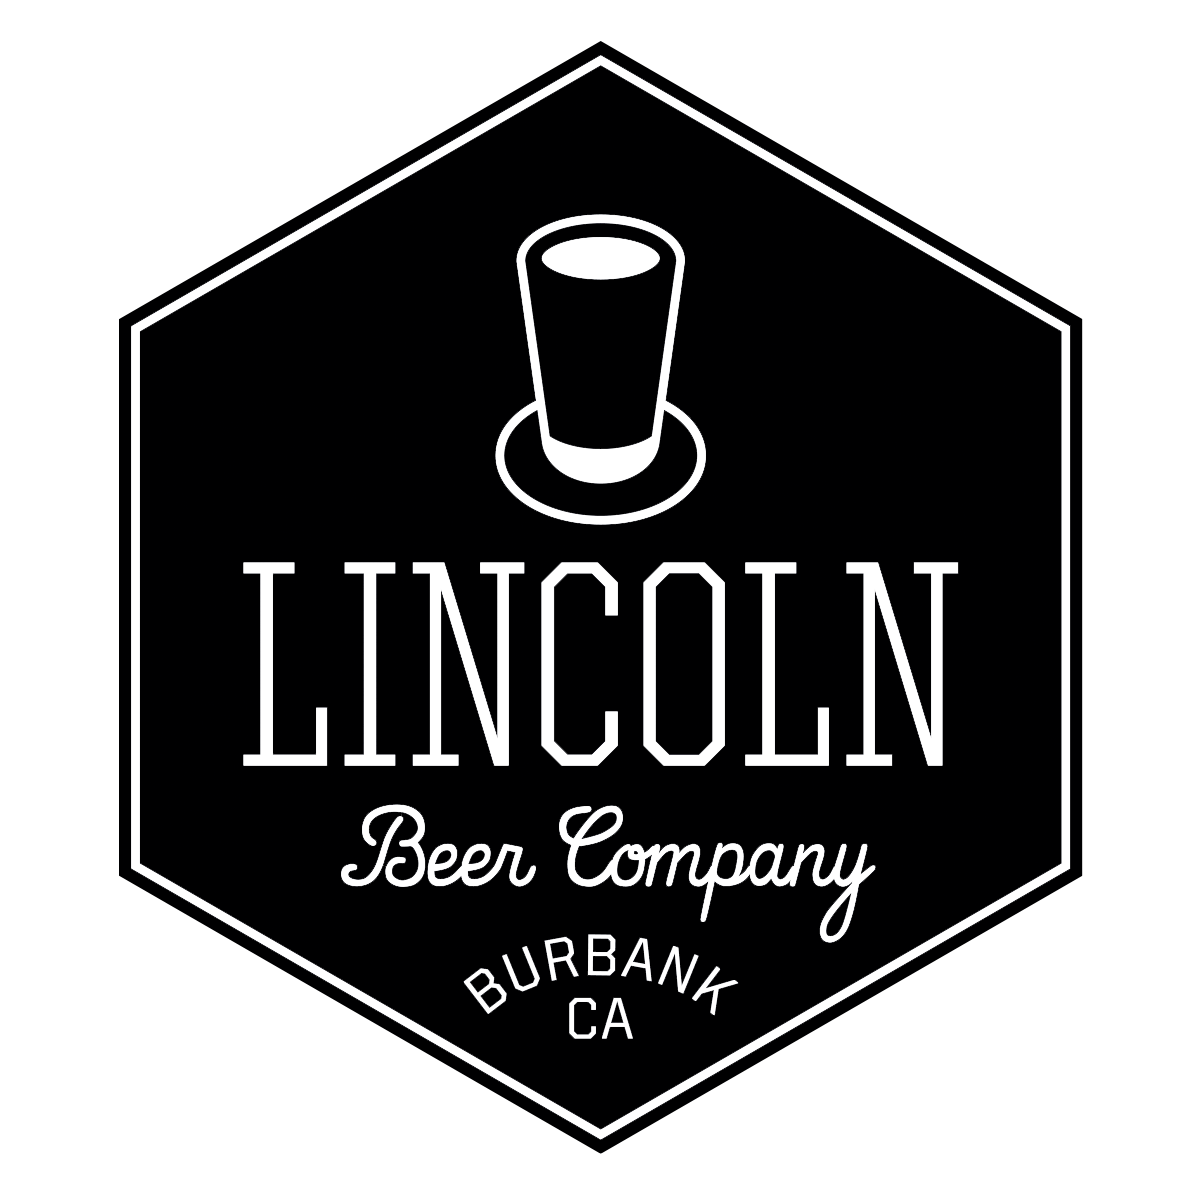 A Company with Harp Beer Company Logo - Lincoln Beer Company